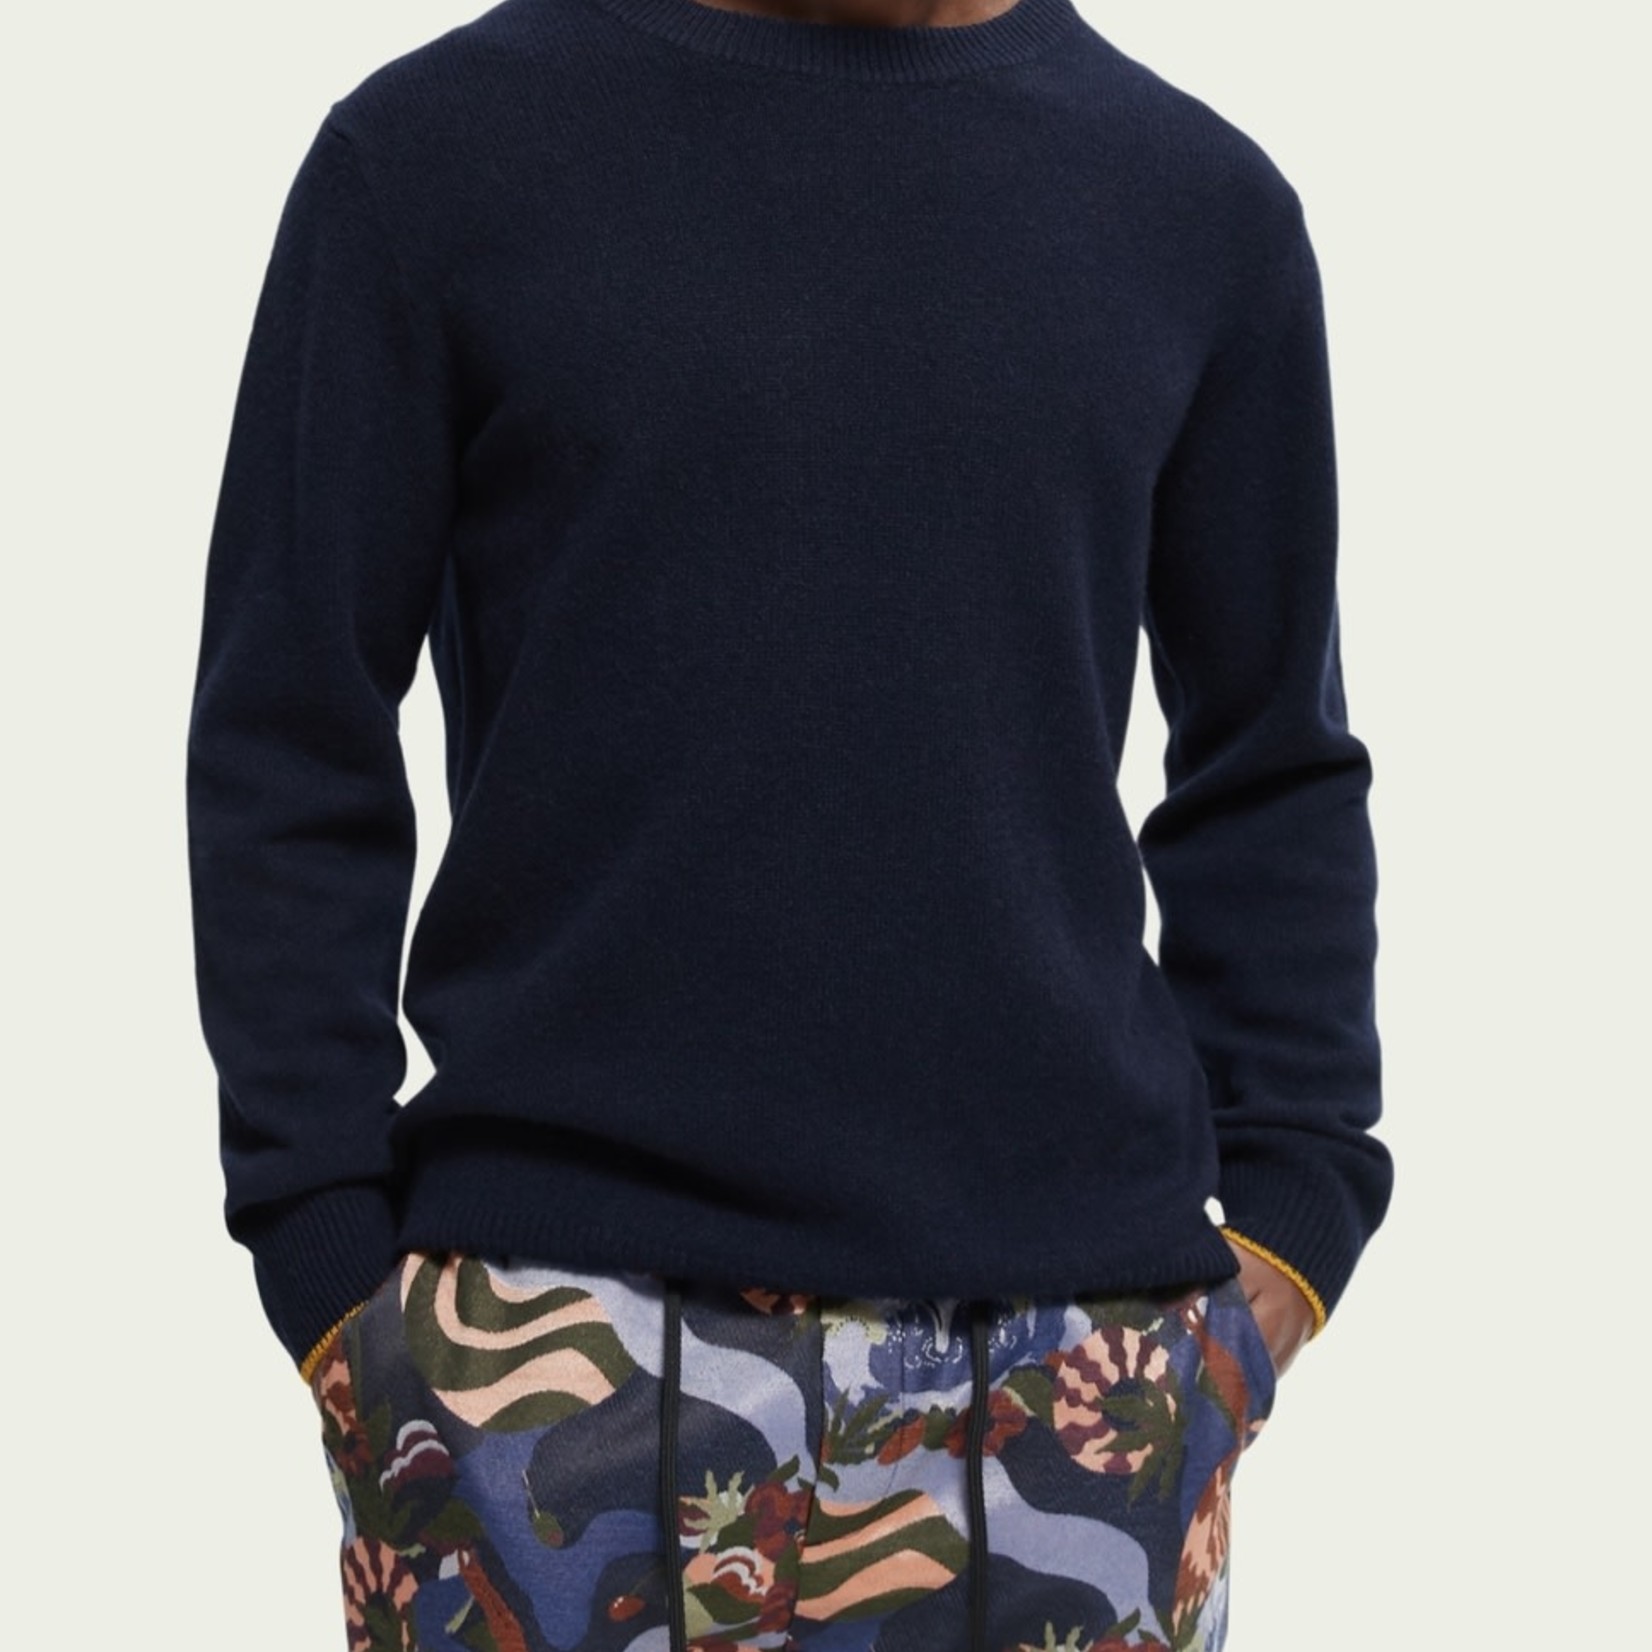 Contrast Trimmed Cashmere Crewneck Sweater